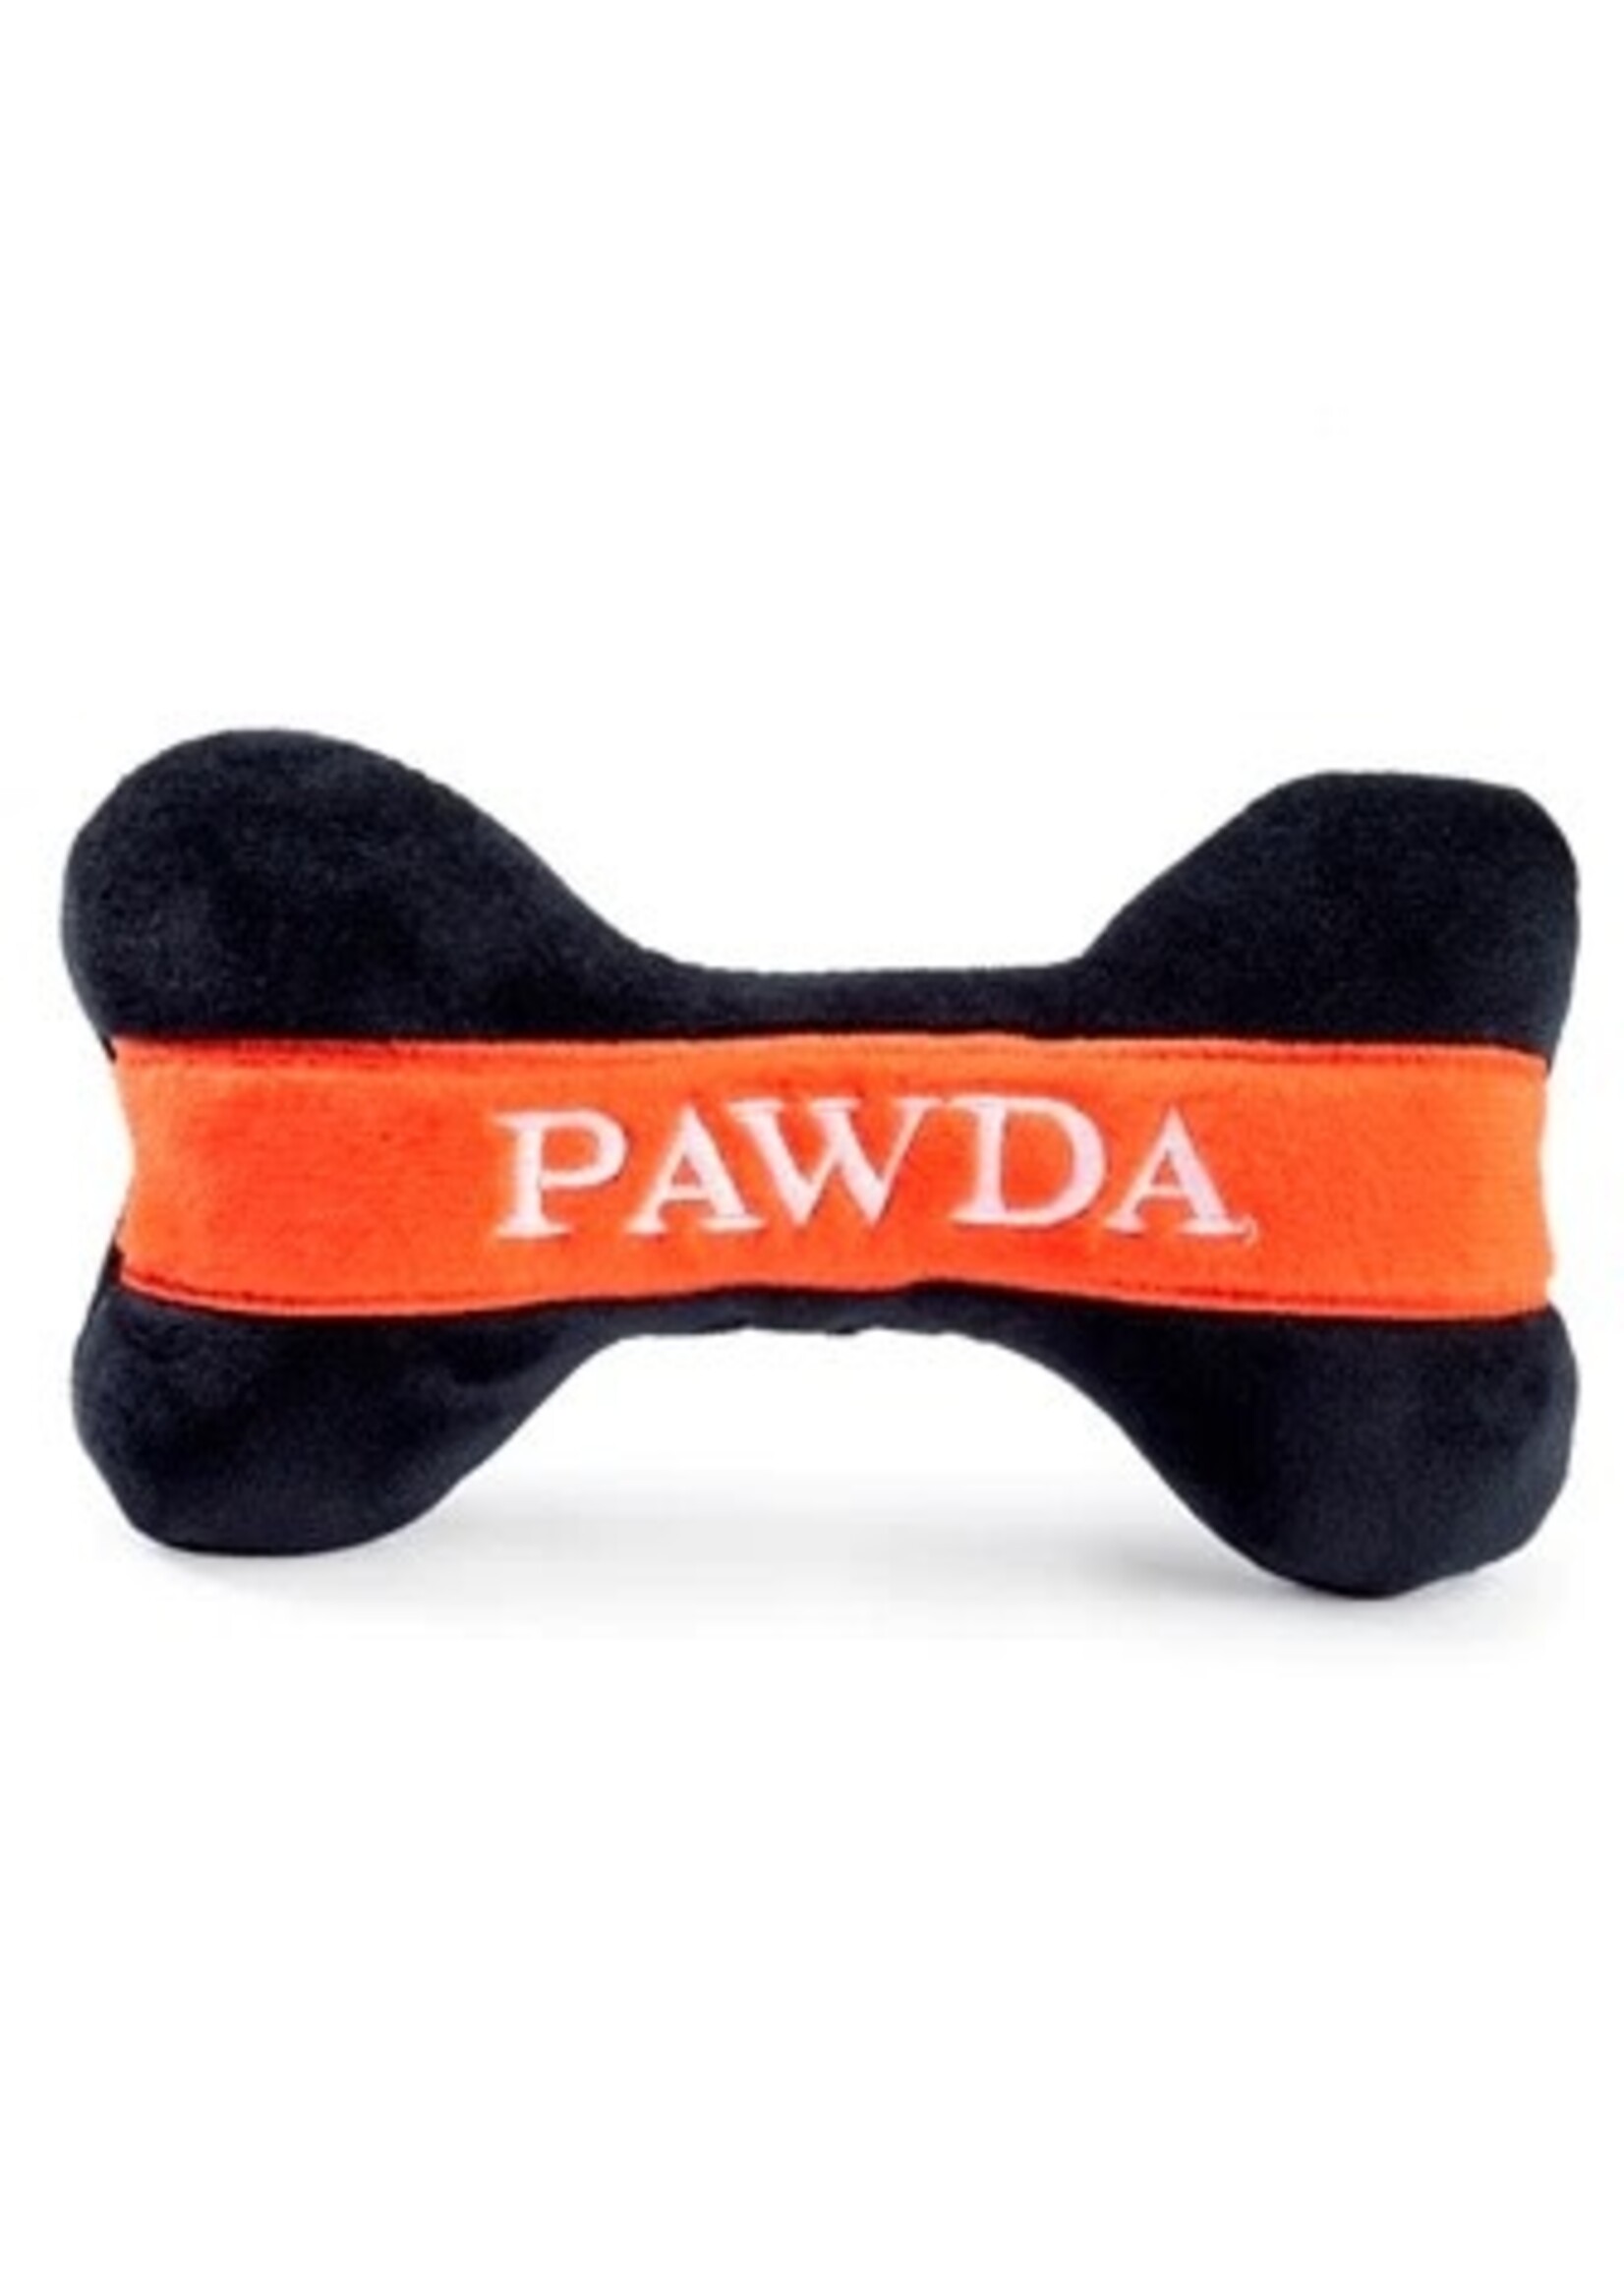 Haute Diggity Dog Pawda Bone Squeaker Dog Toy